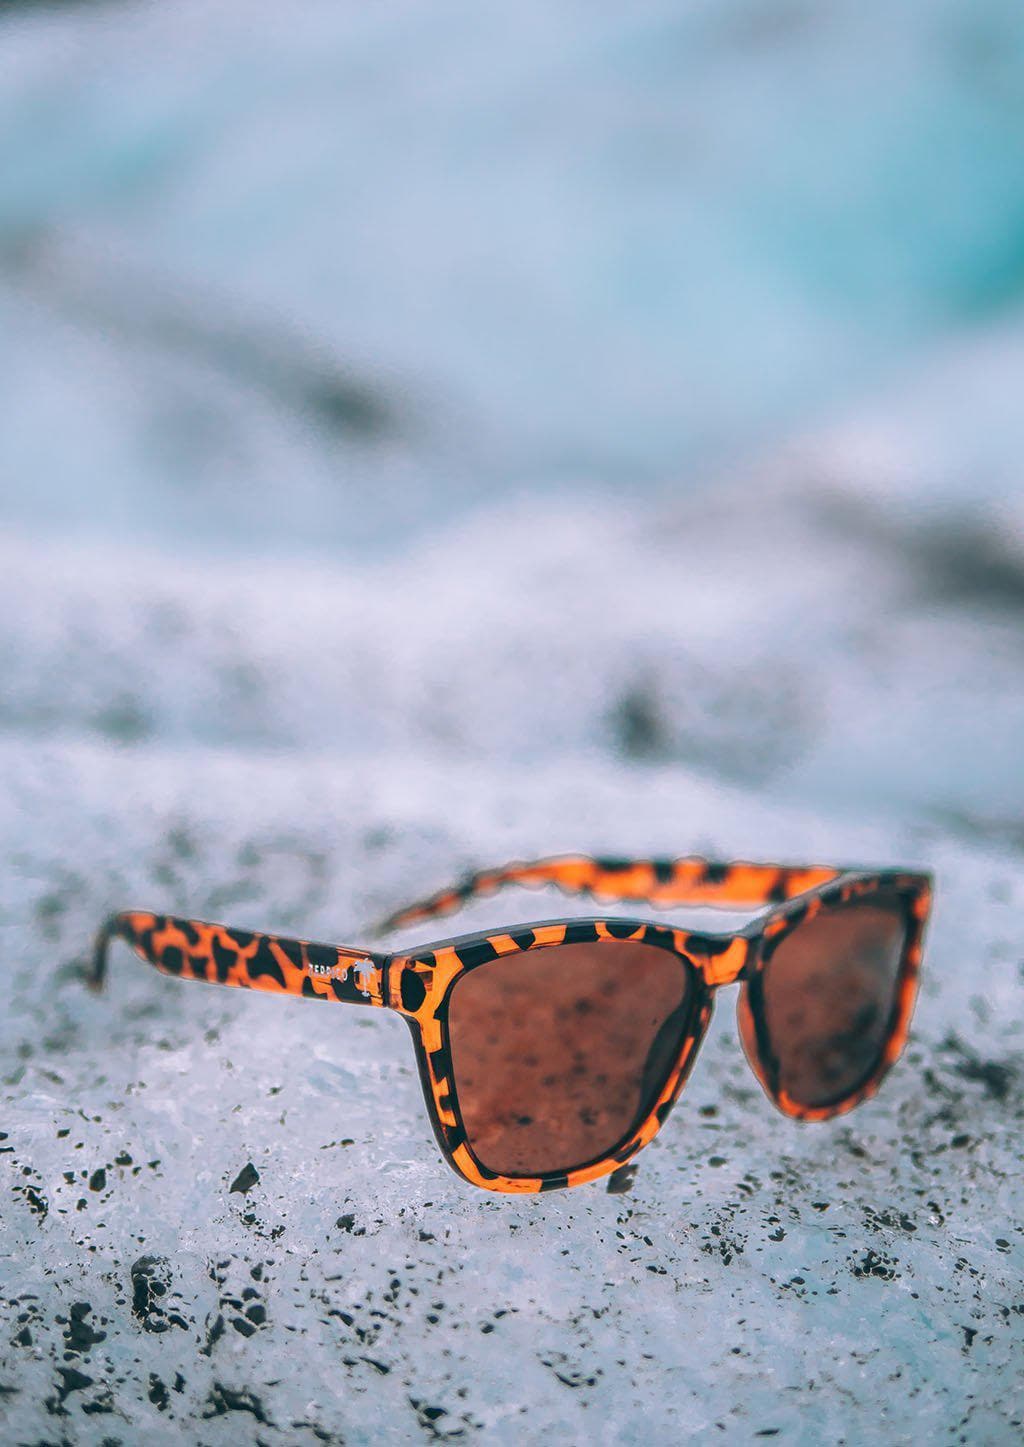 MOOD Wayfarer - Foxy - Sunglasses with brown lenses.